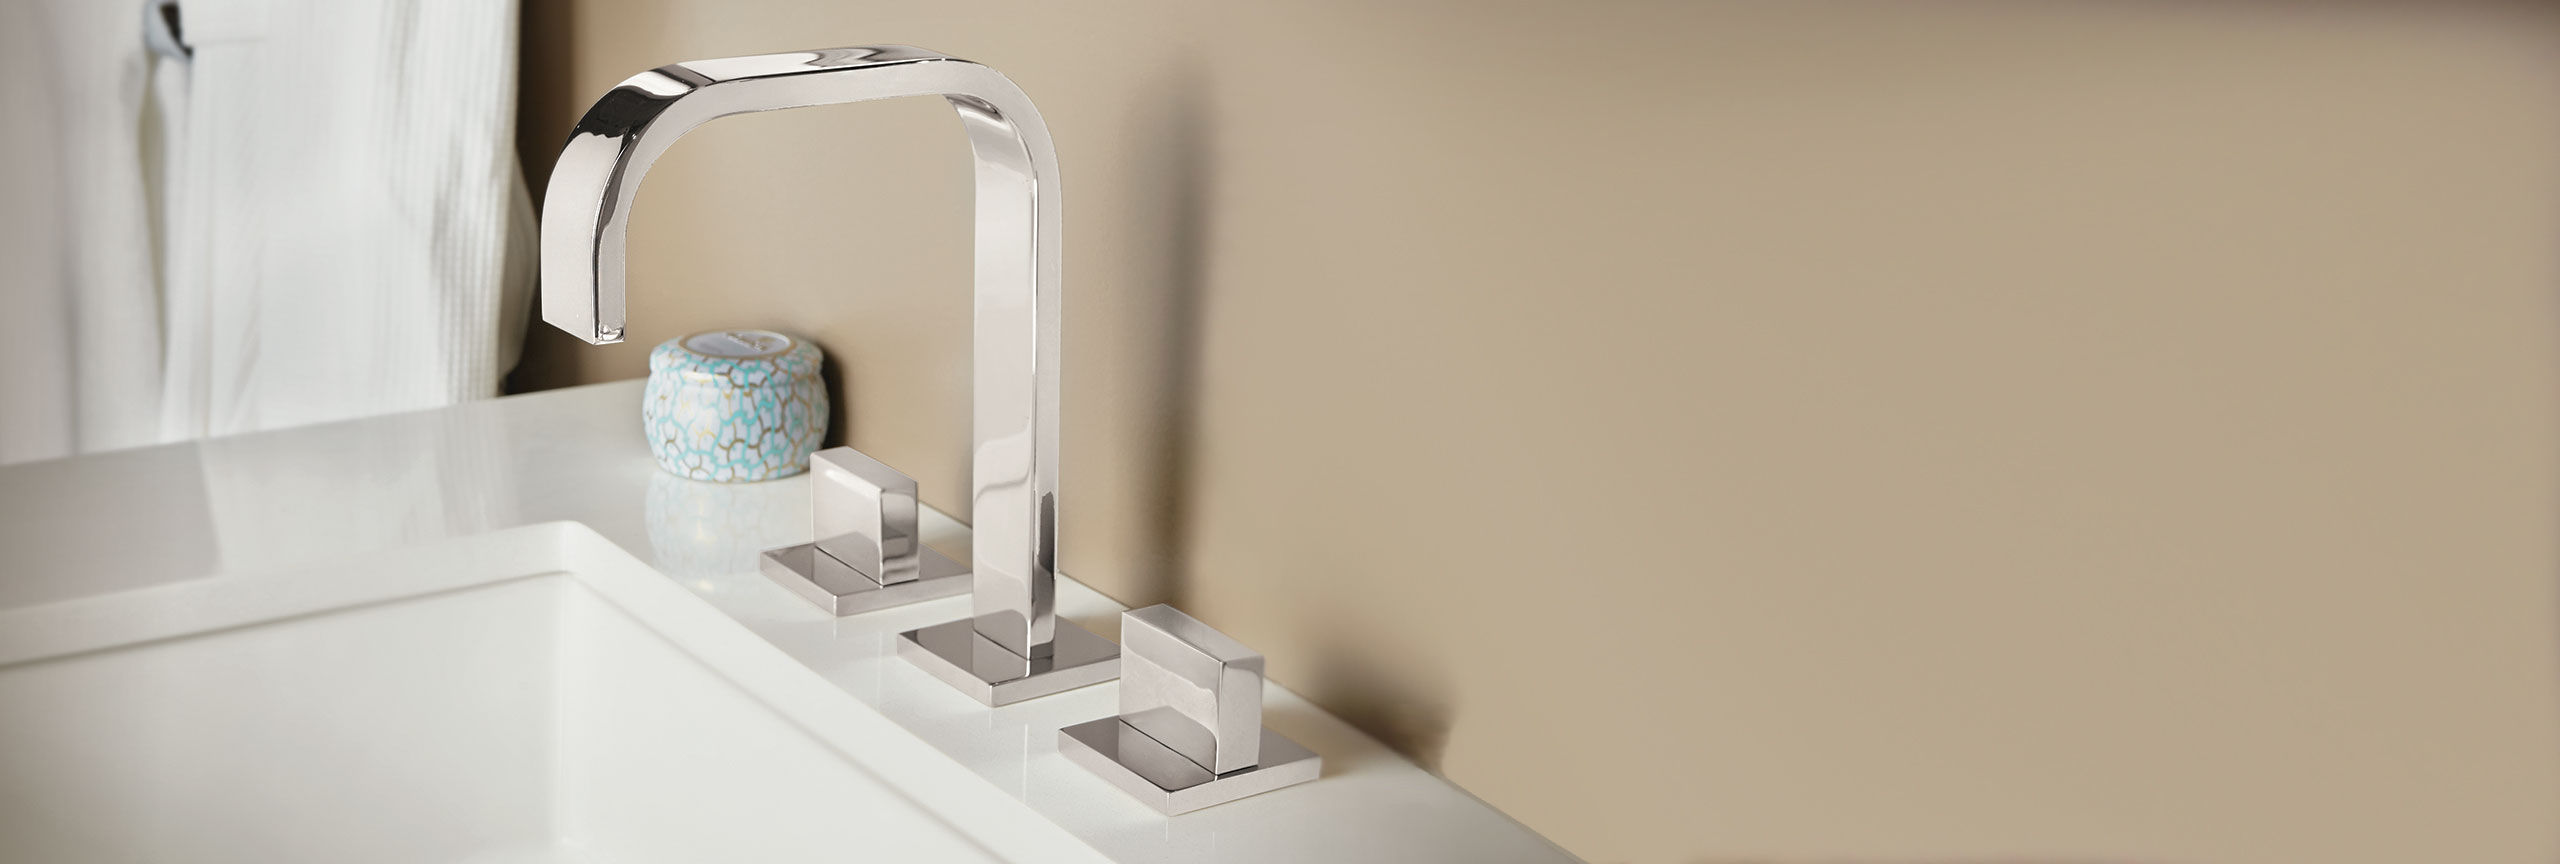 bathroom series Terra Mar widespread faucet in chrome